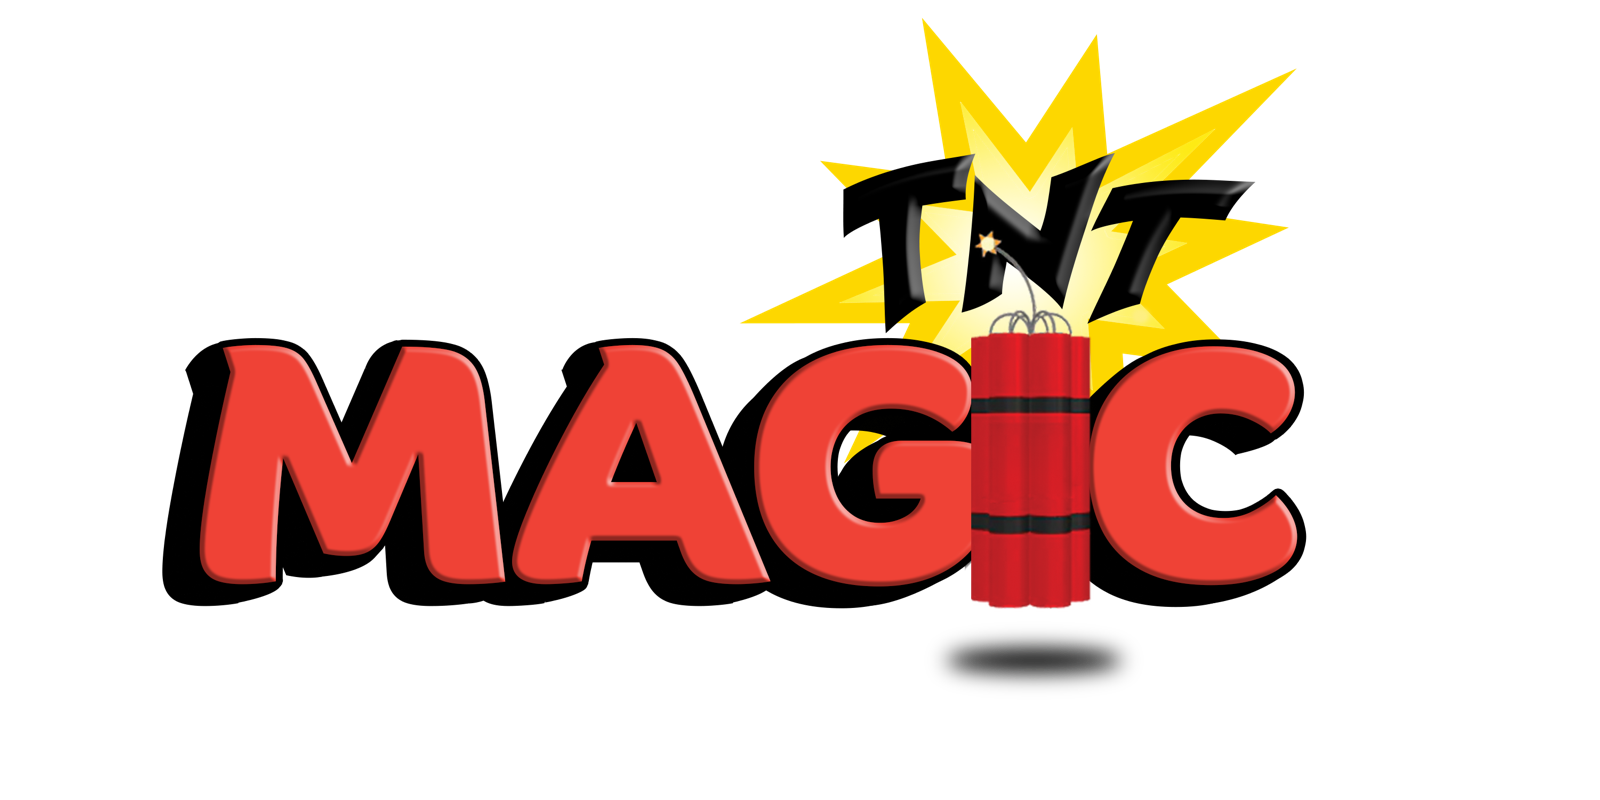 Reel Magic Episode 24 (paul Gertner) - Dvd Kozmomagic Inc.